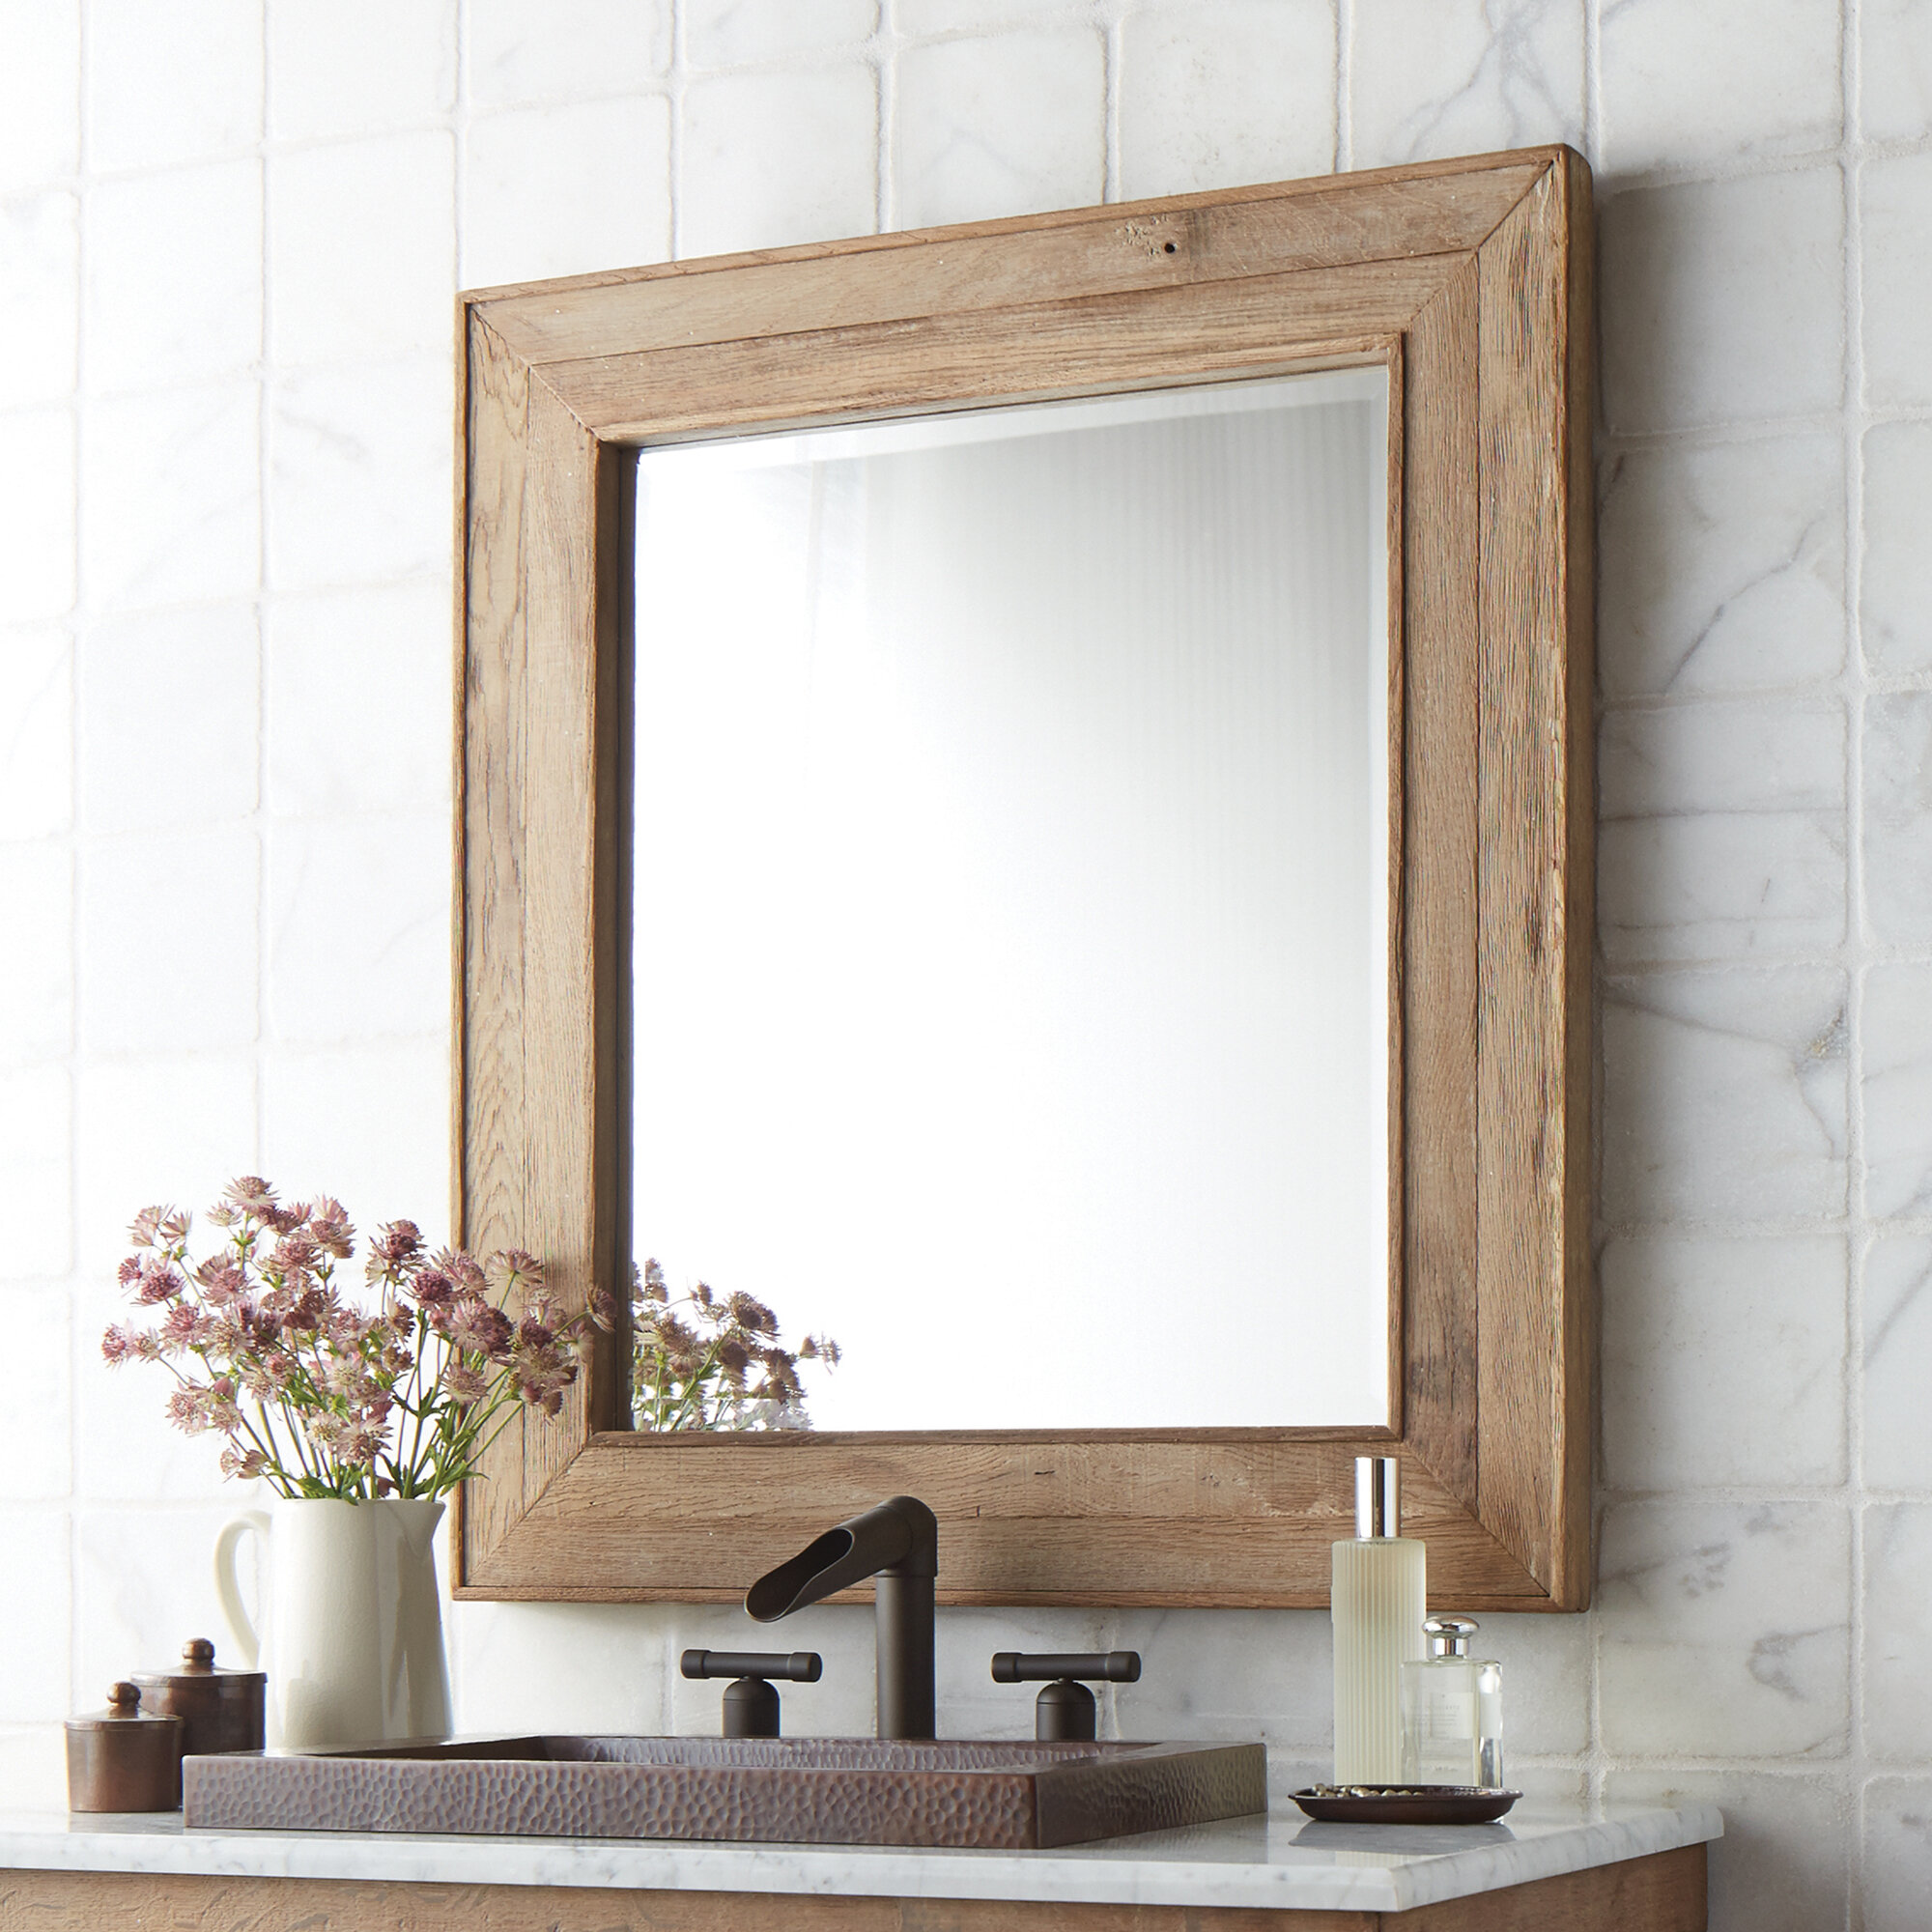 wood framed bathroom mirrors